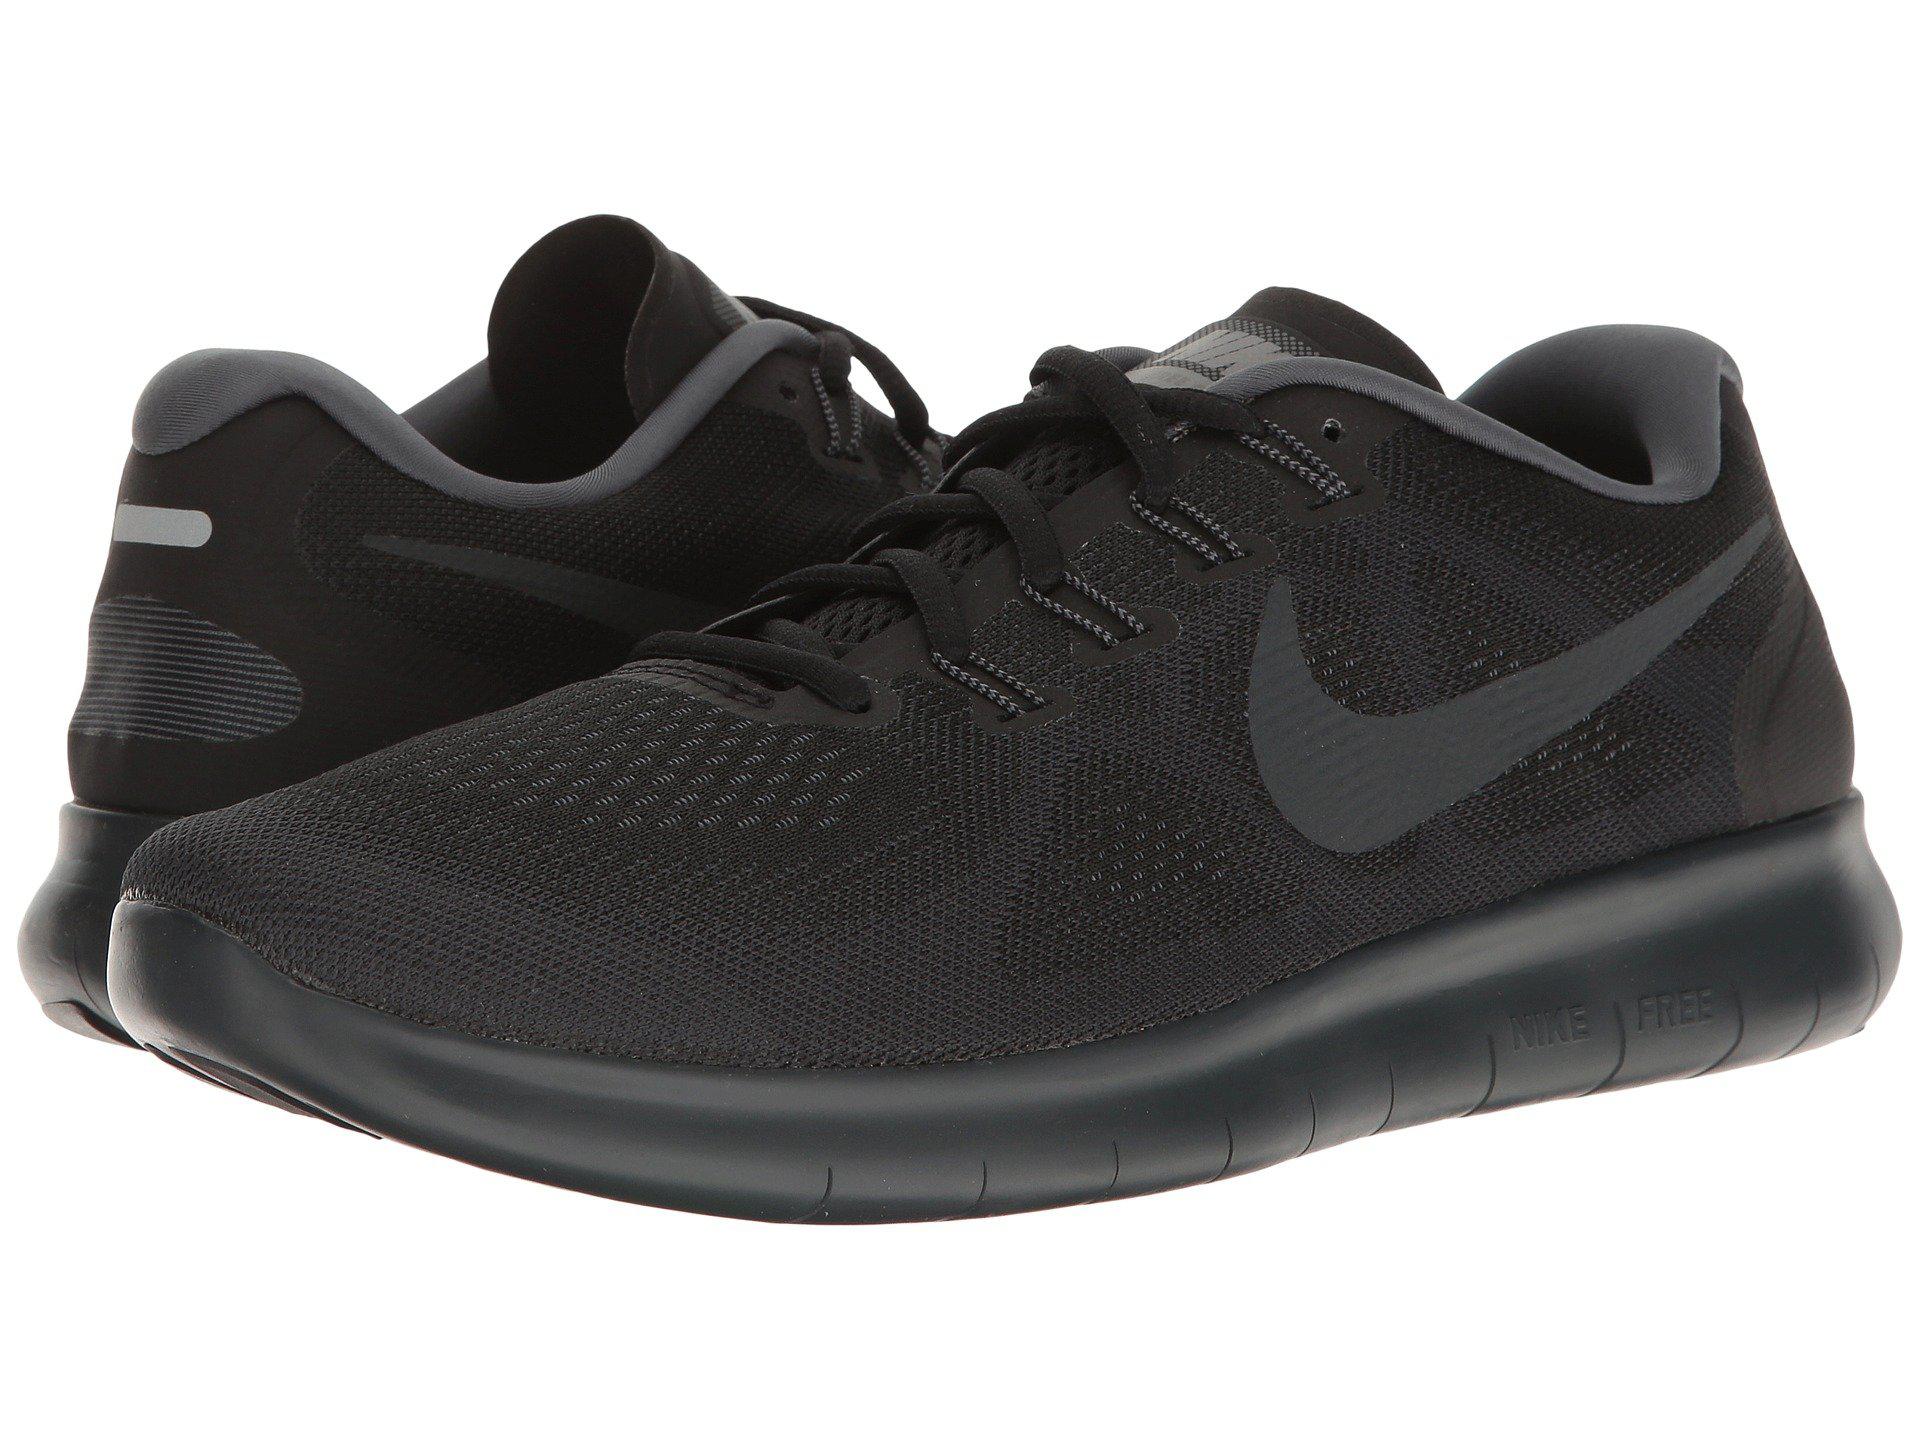 Premisse spreker Tact Nike Free Rn 2017 (black/anthracite/dark Grey/cool Grey) Men's Running  Shoes for Men | Lyst